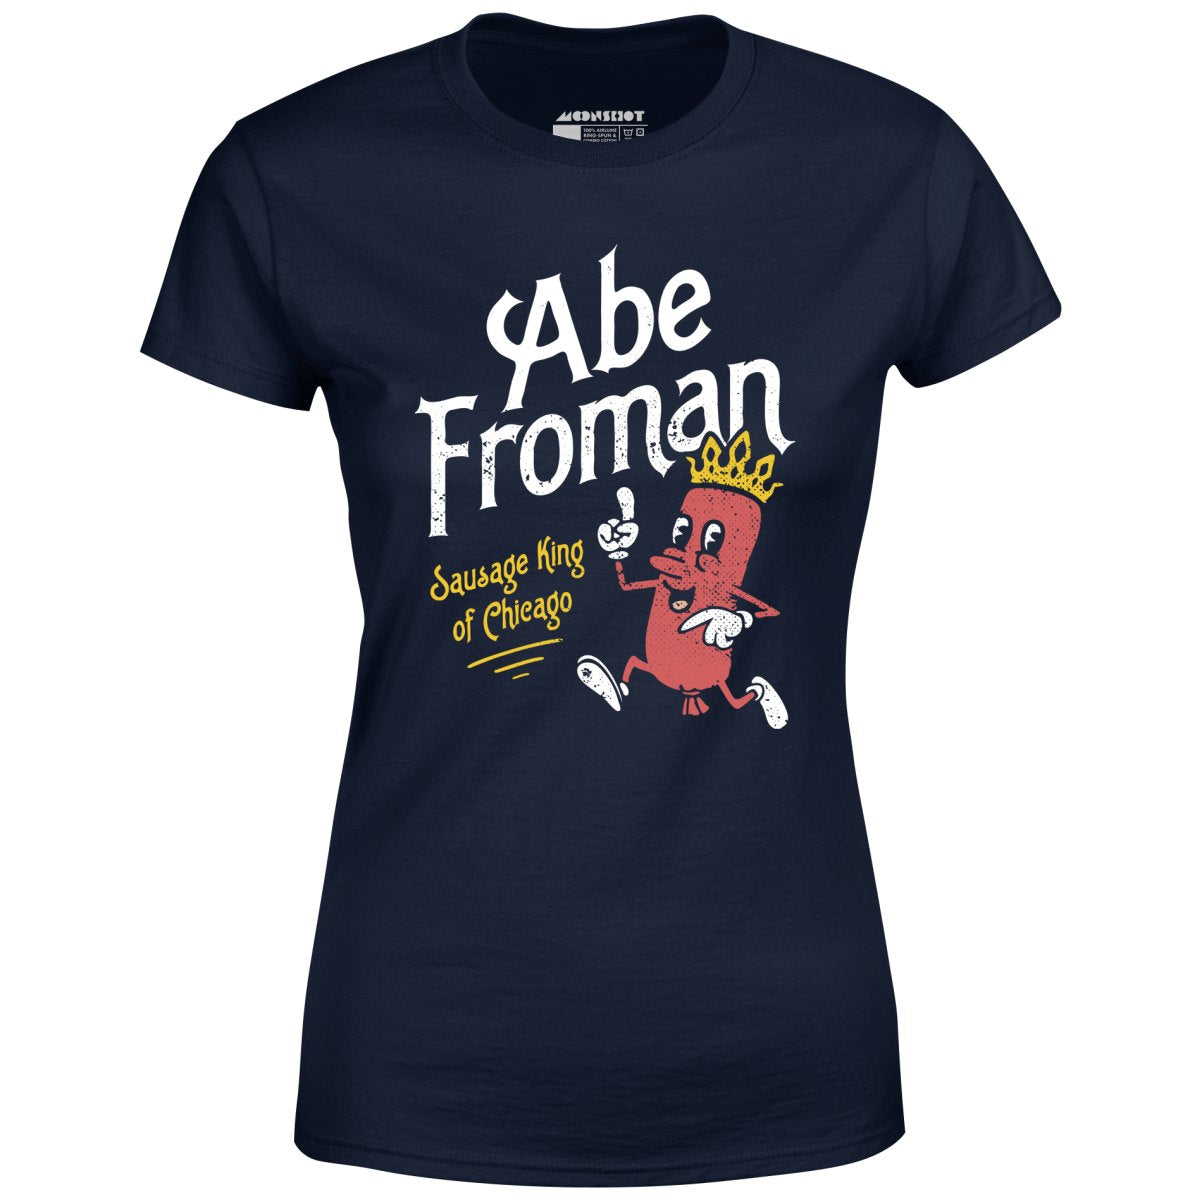 Abe Froman - Sausage King of Chicago - Women's T-Shirt